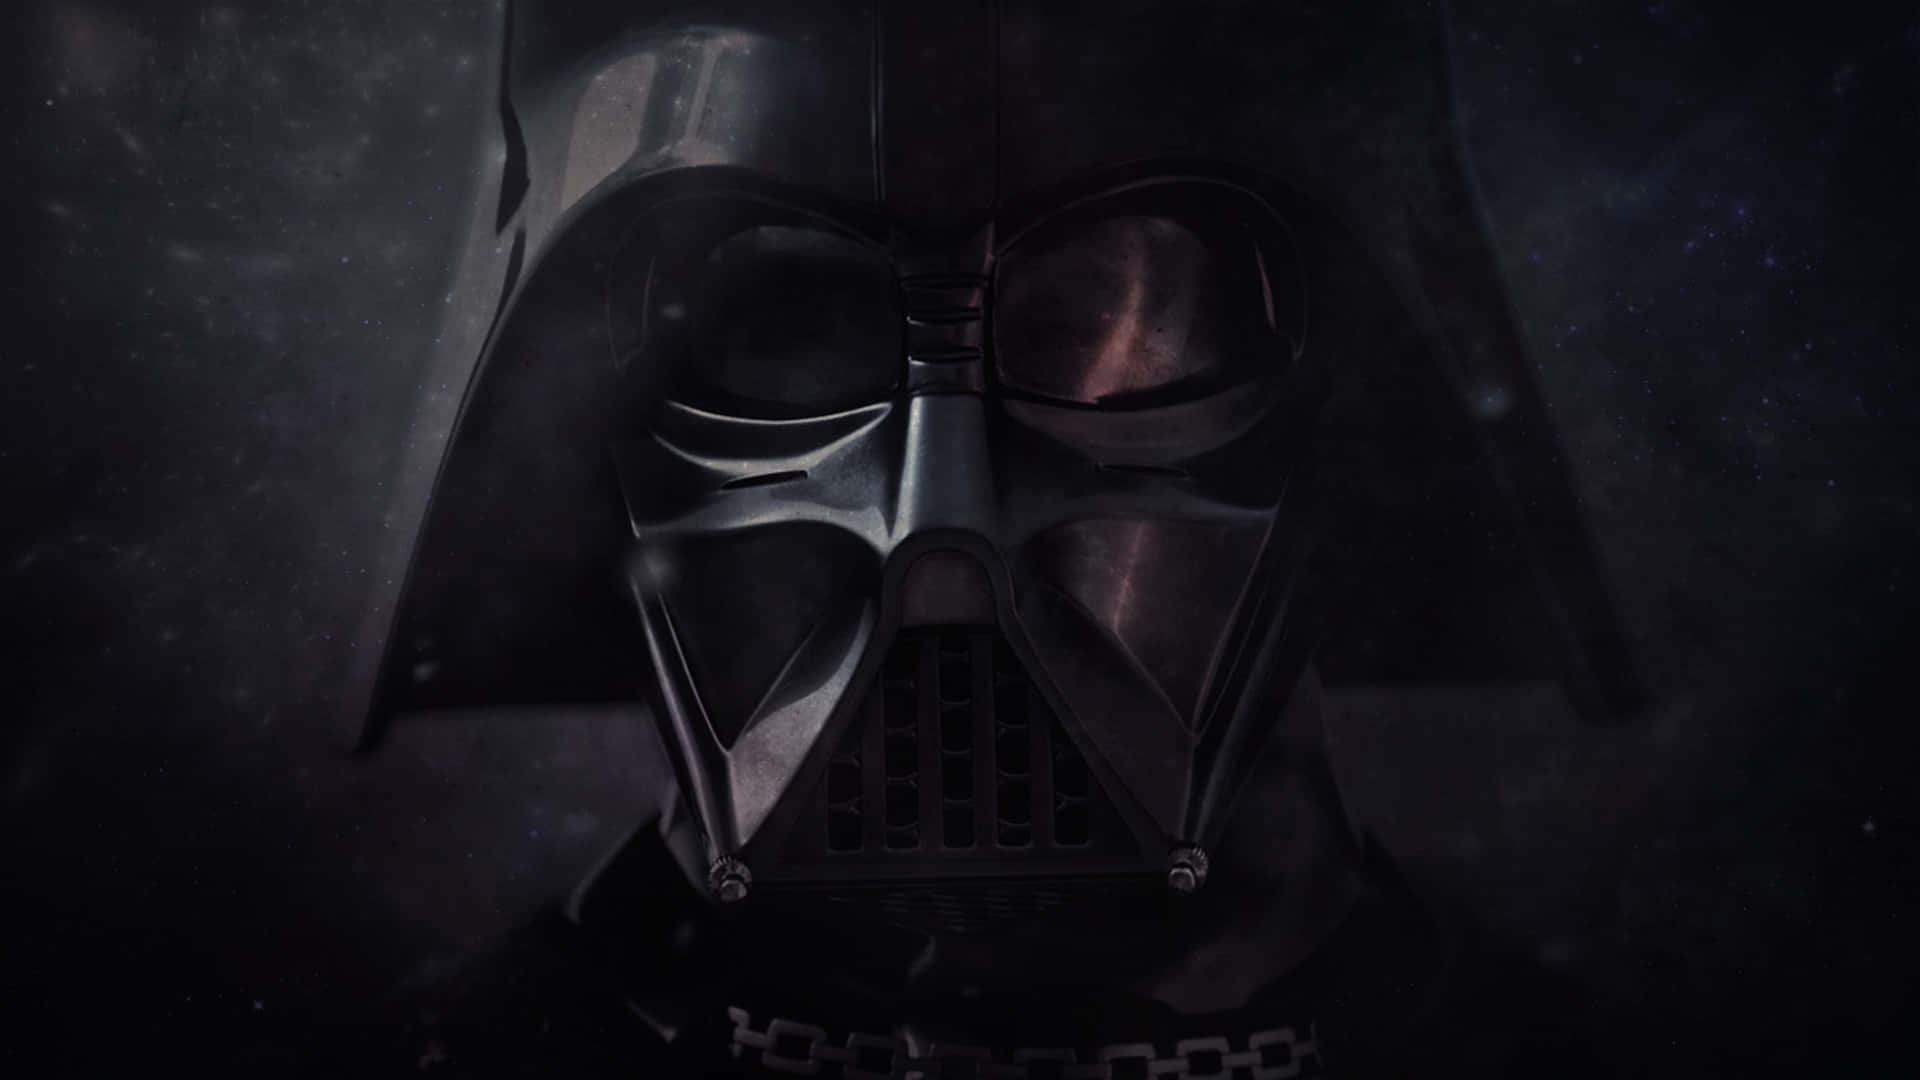 Darth Vader, leader of the Dark Side